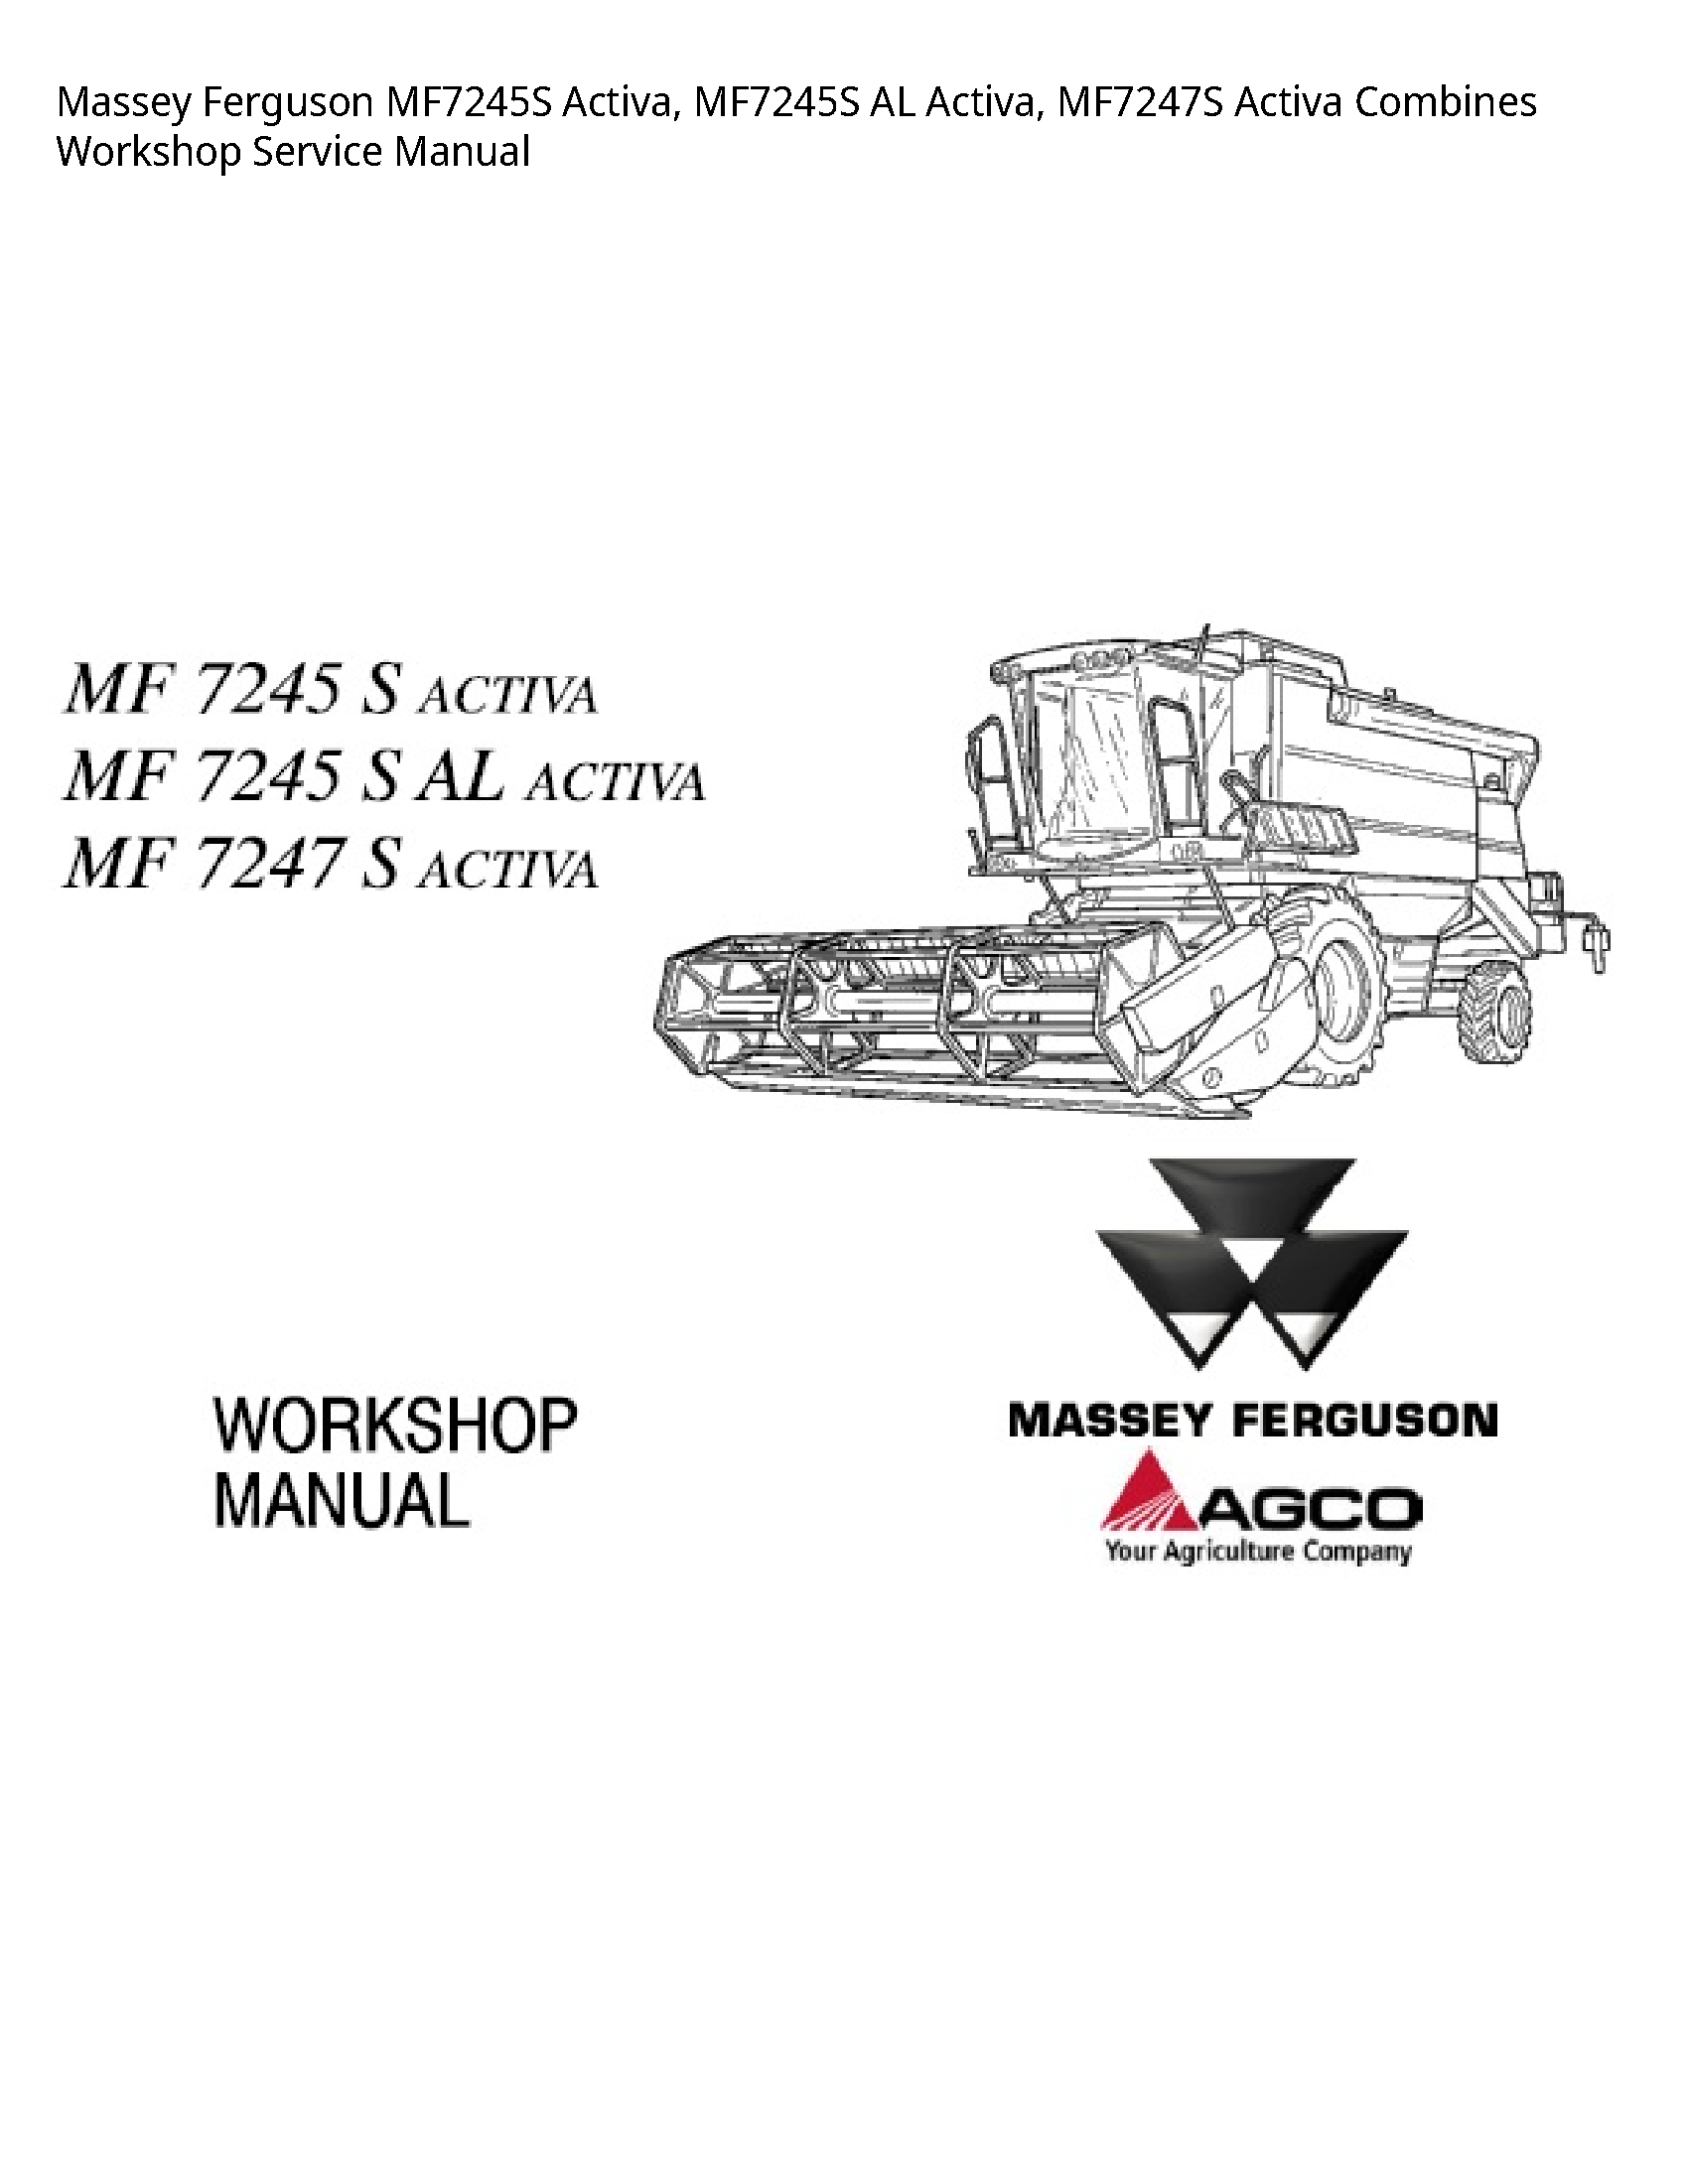 Massey Ferguson MF7245S Activa manual